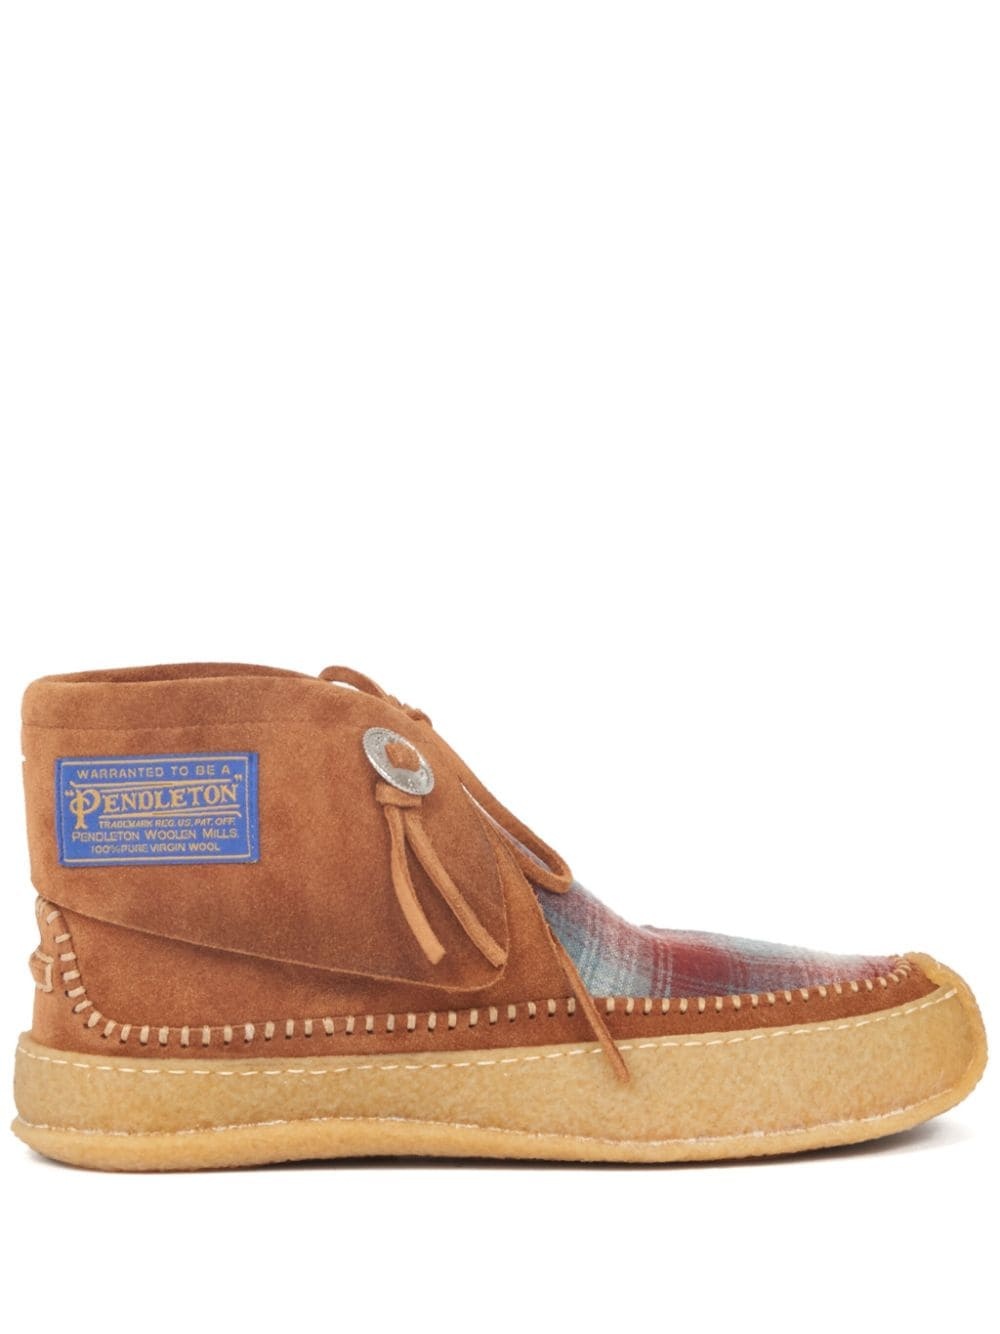 Pendleton leather boat shoes - 1